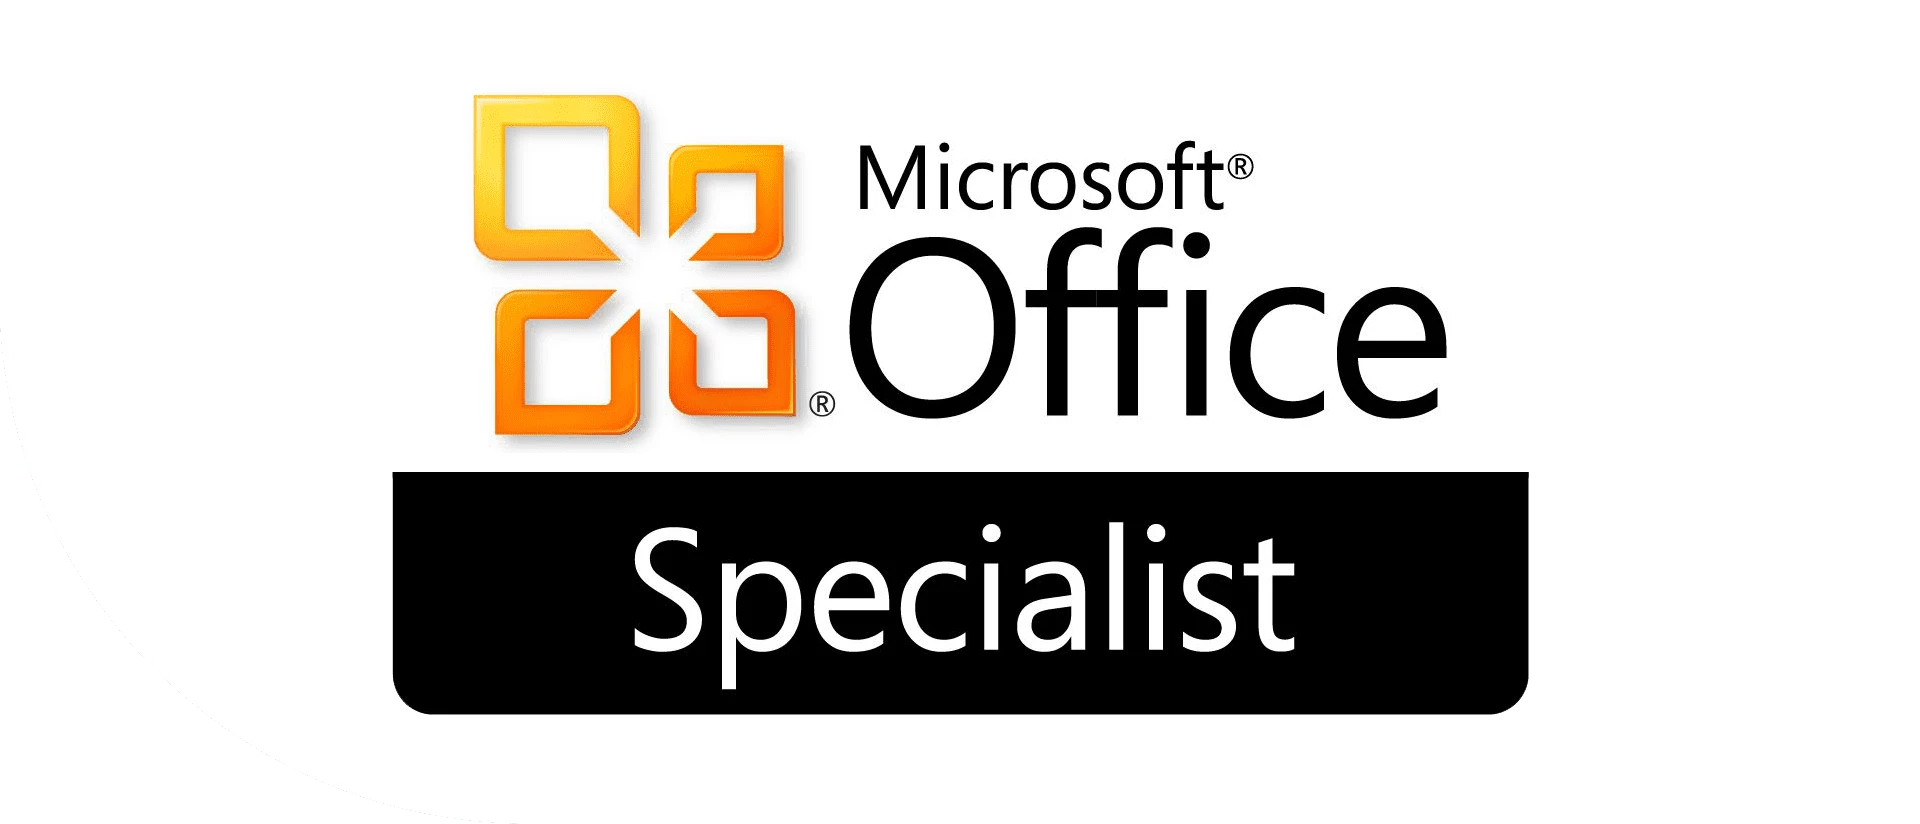 Microsoft Office Specialist logo